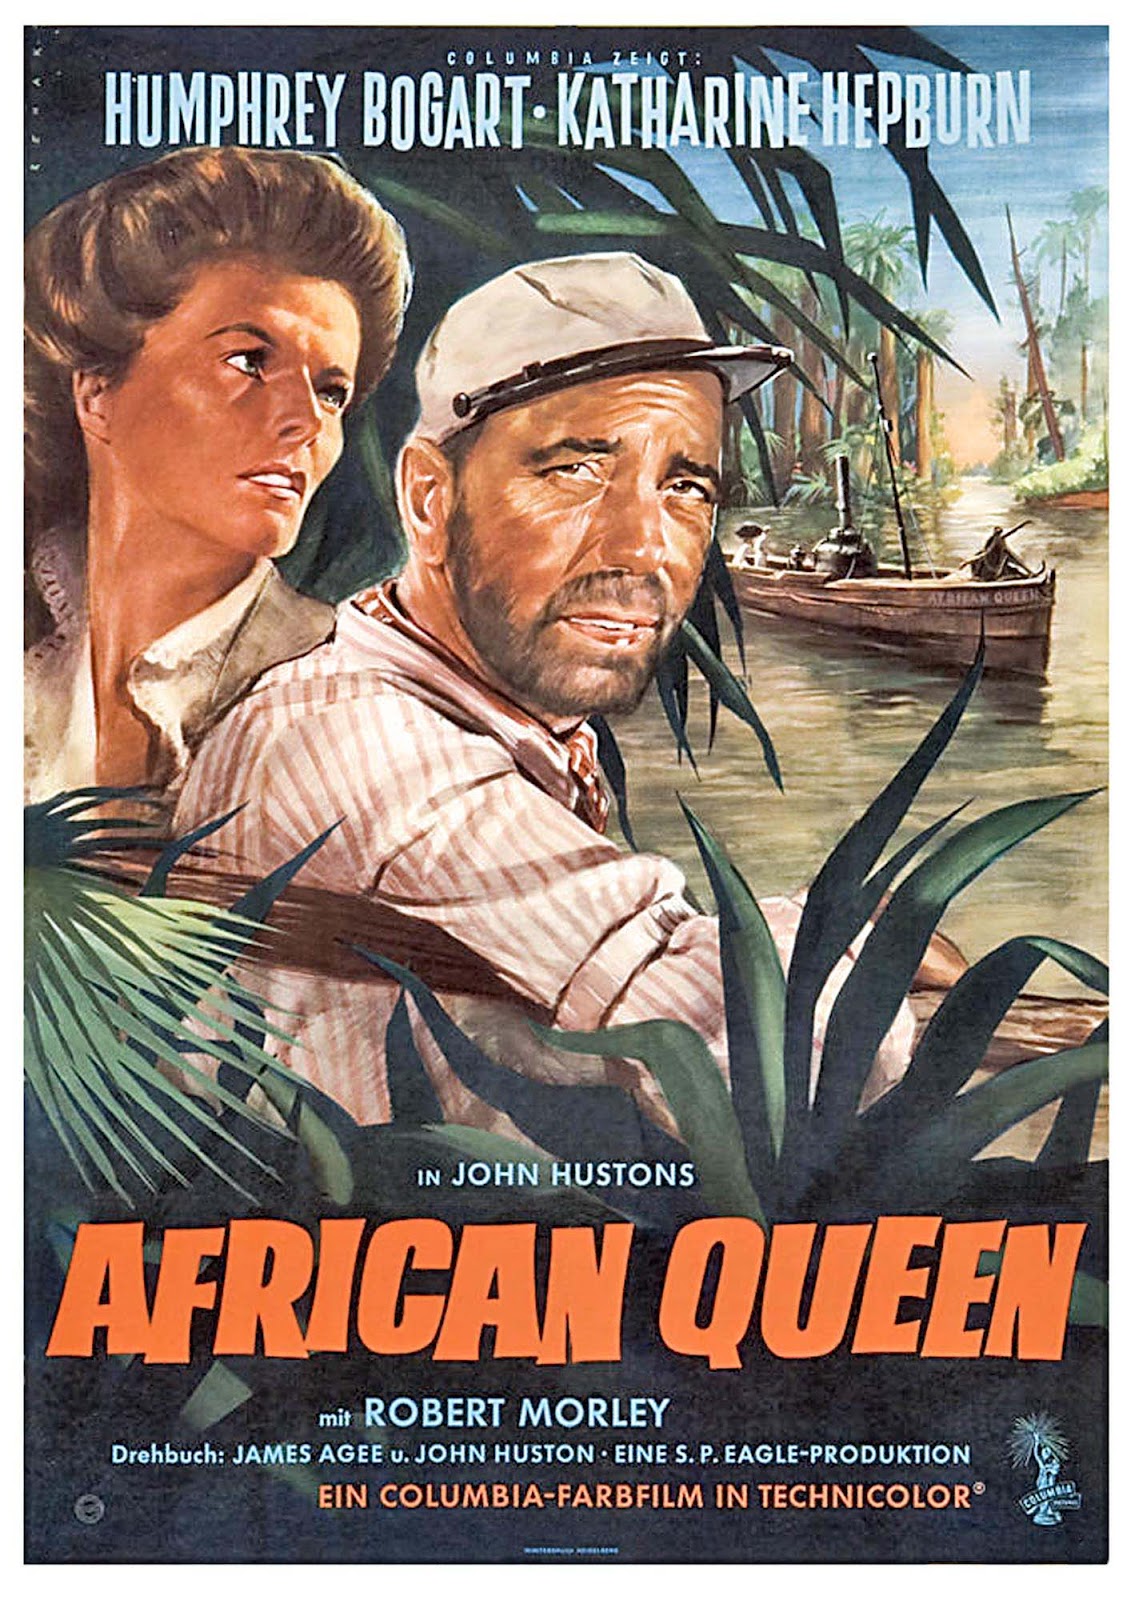 EL MUNDO DEL CARTEL: LA REINA DE AFRICA. 1951